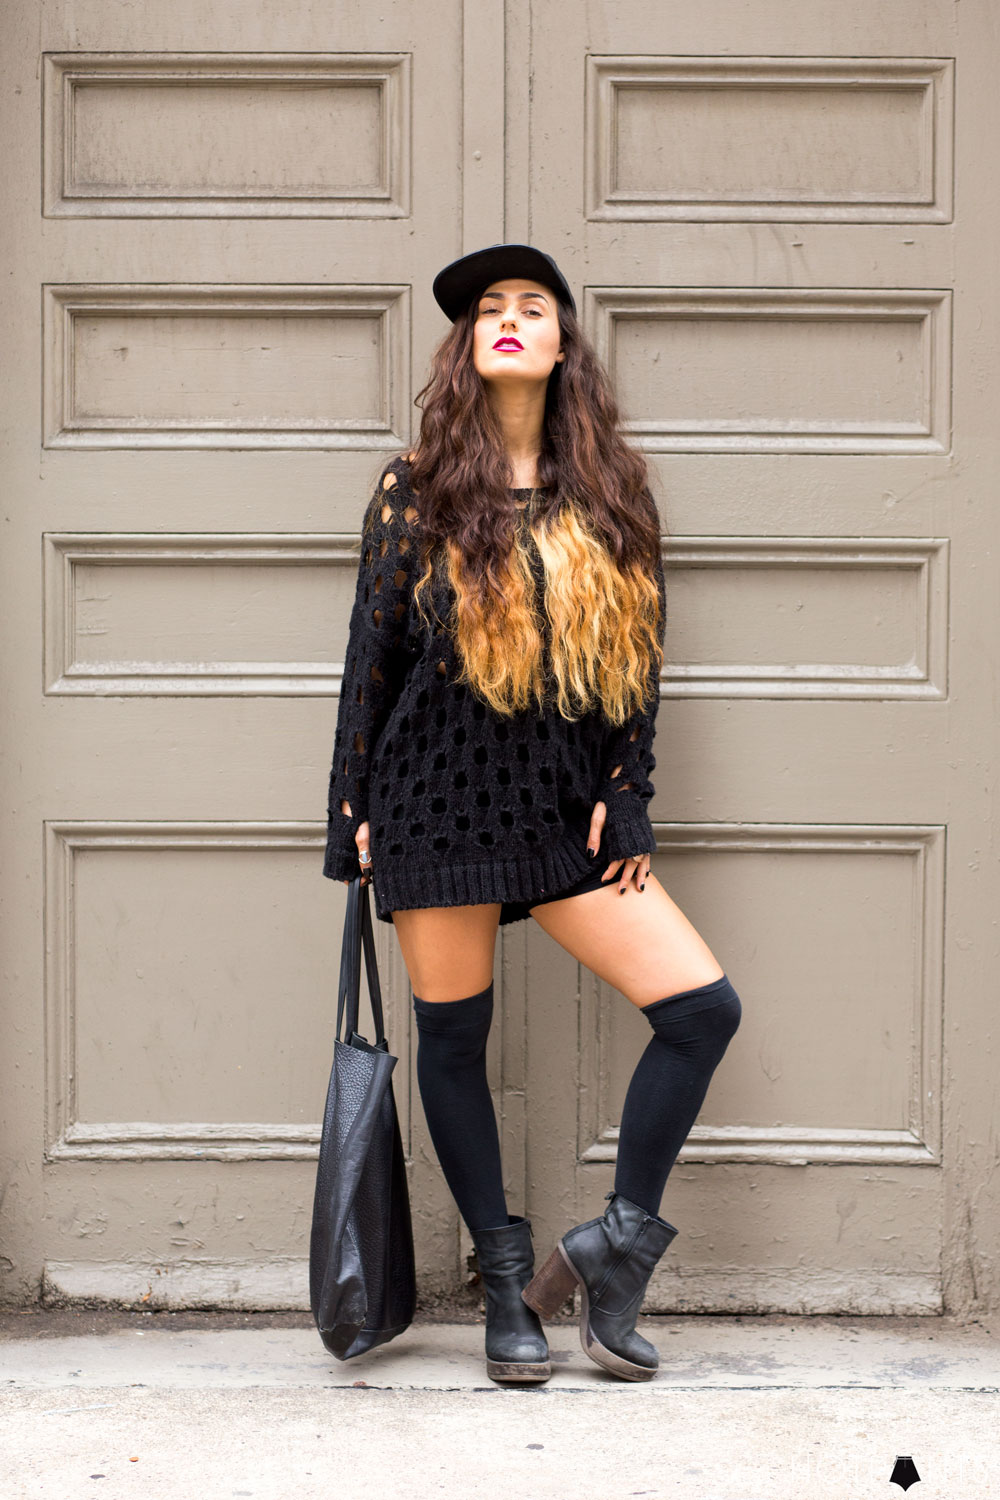 Goth Girl Woman In Short Shorts Black Leather Baseball Hat Bright Lipstick